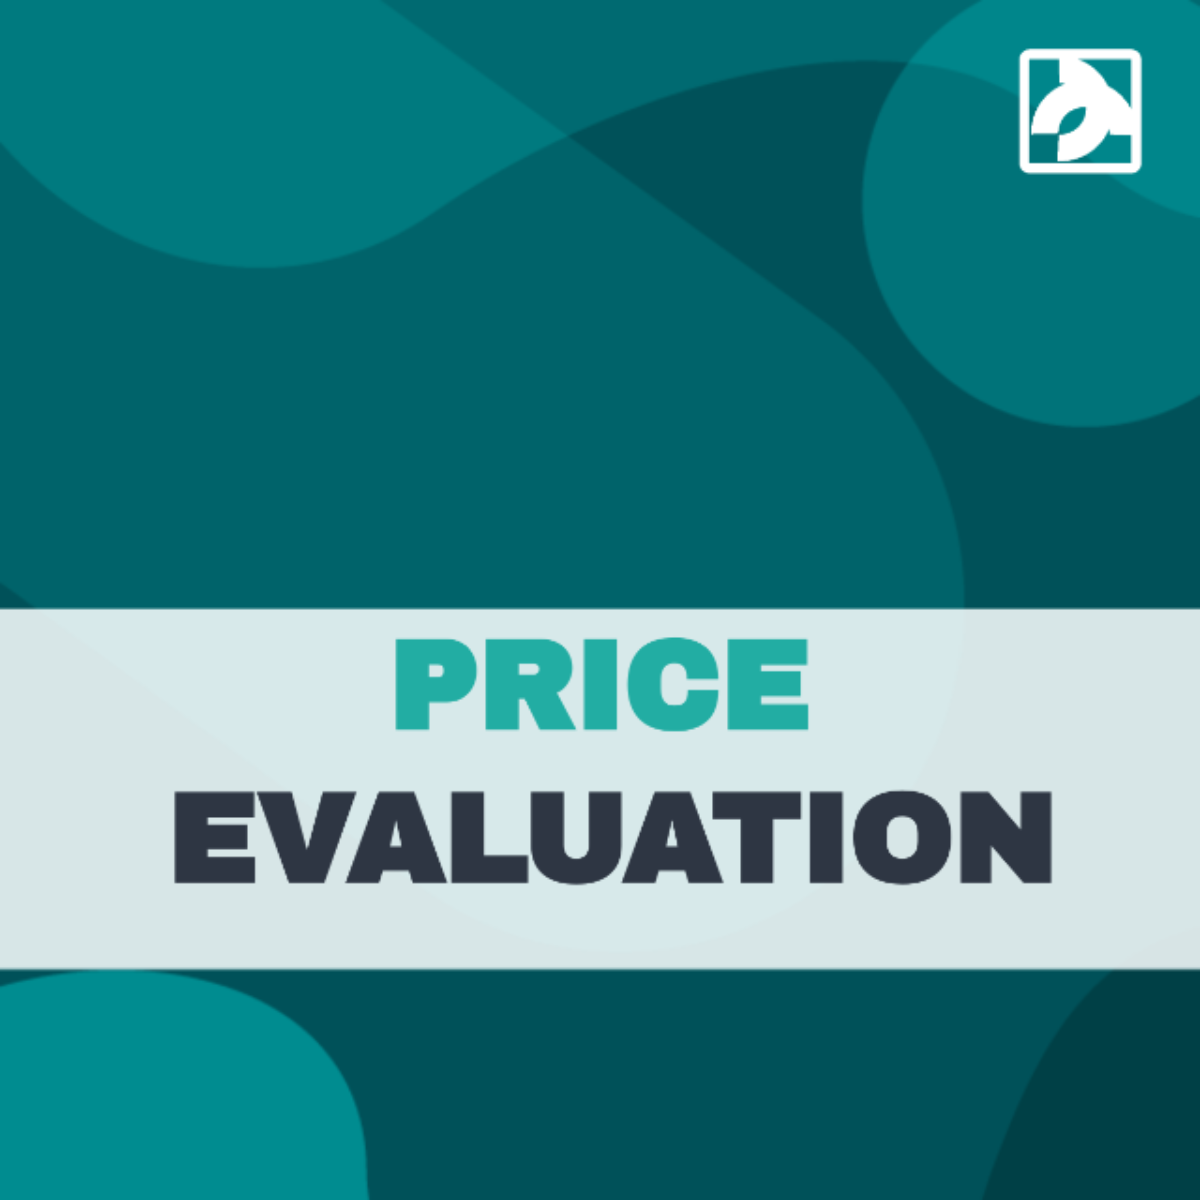 Price Evaluation Template